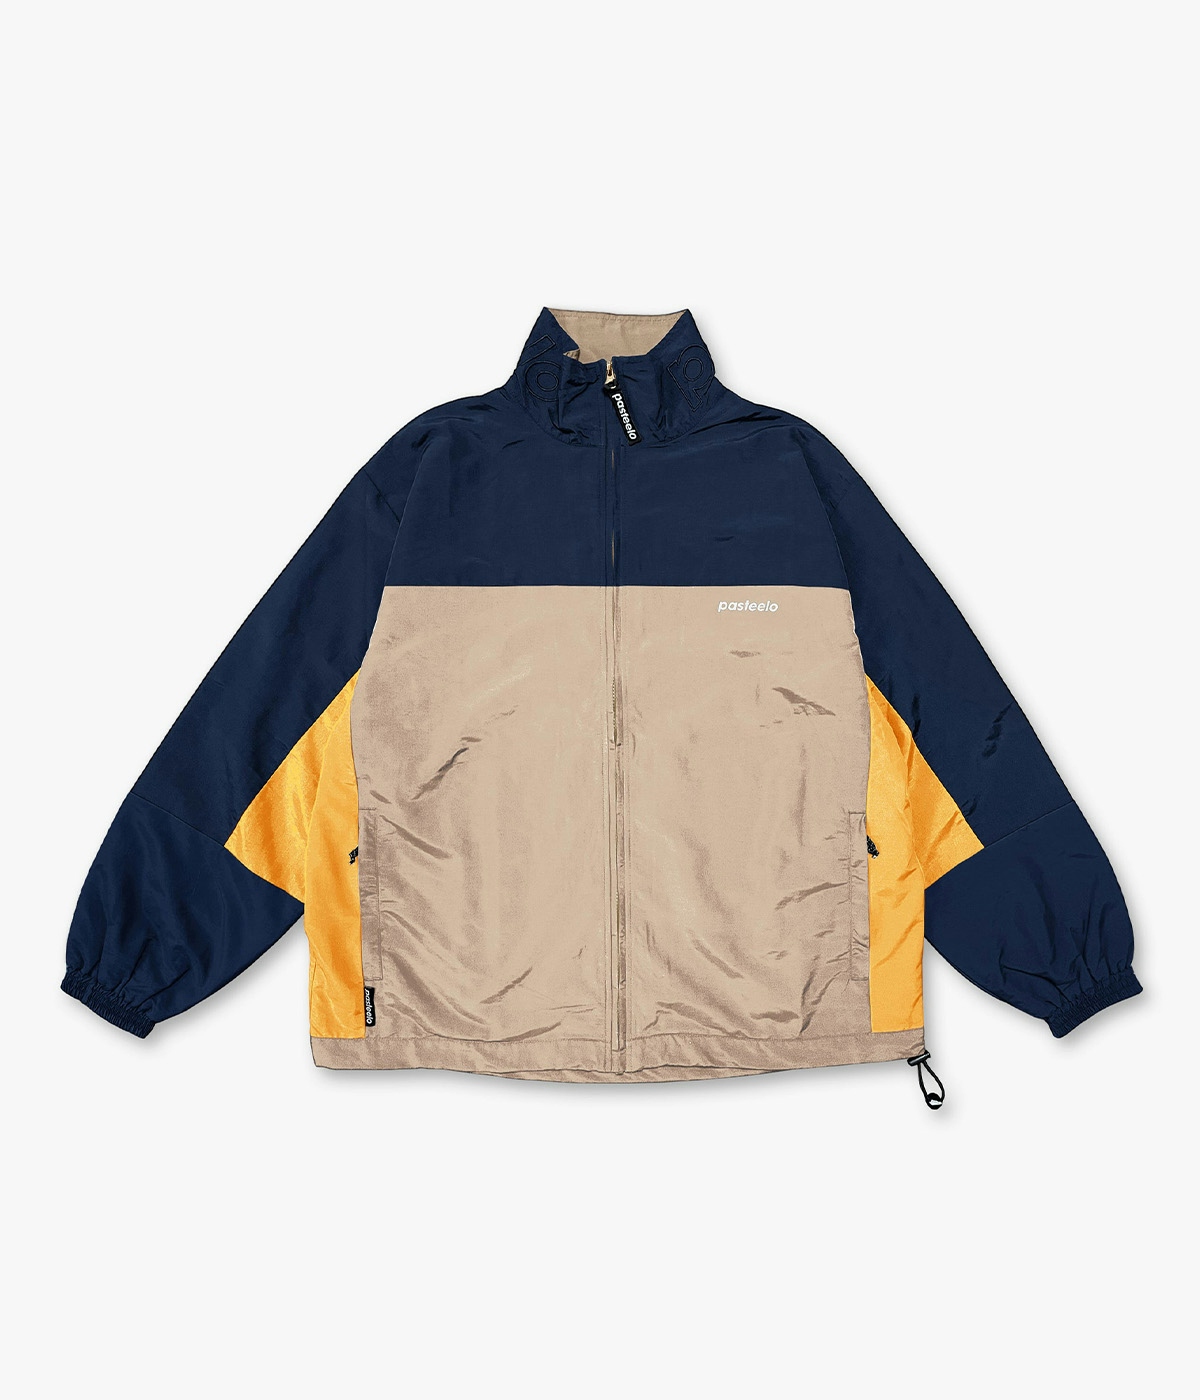 Pasteelo Jacket Sports Windbreaker Navy/Tan/Gold